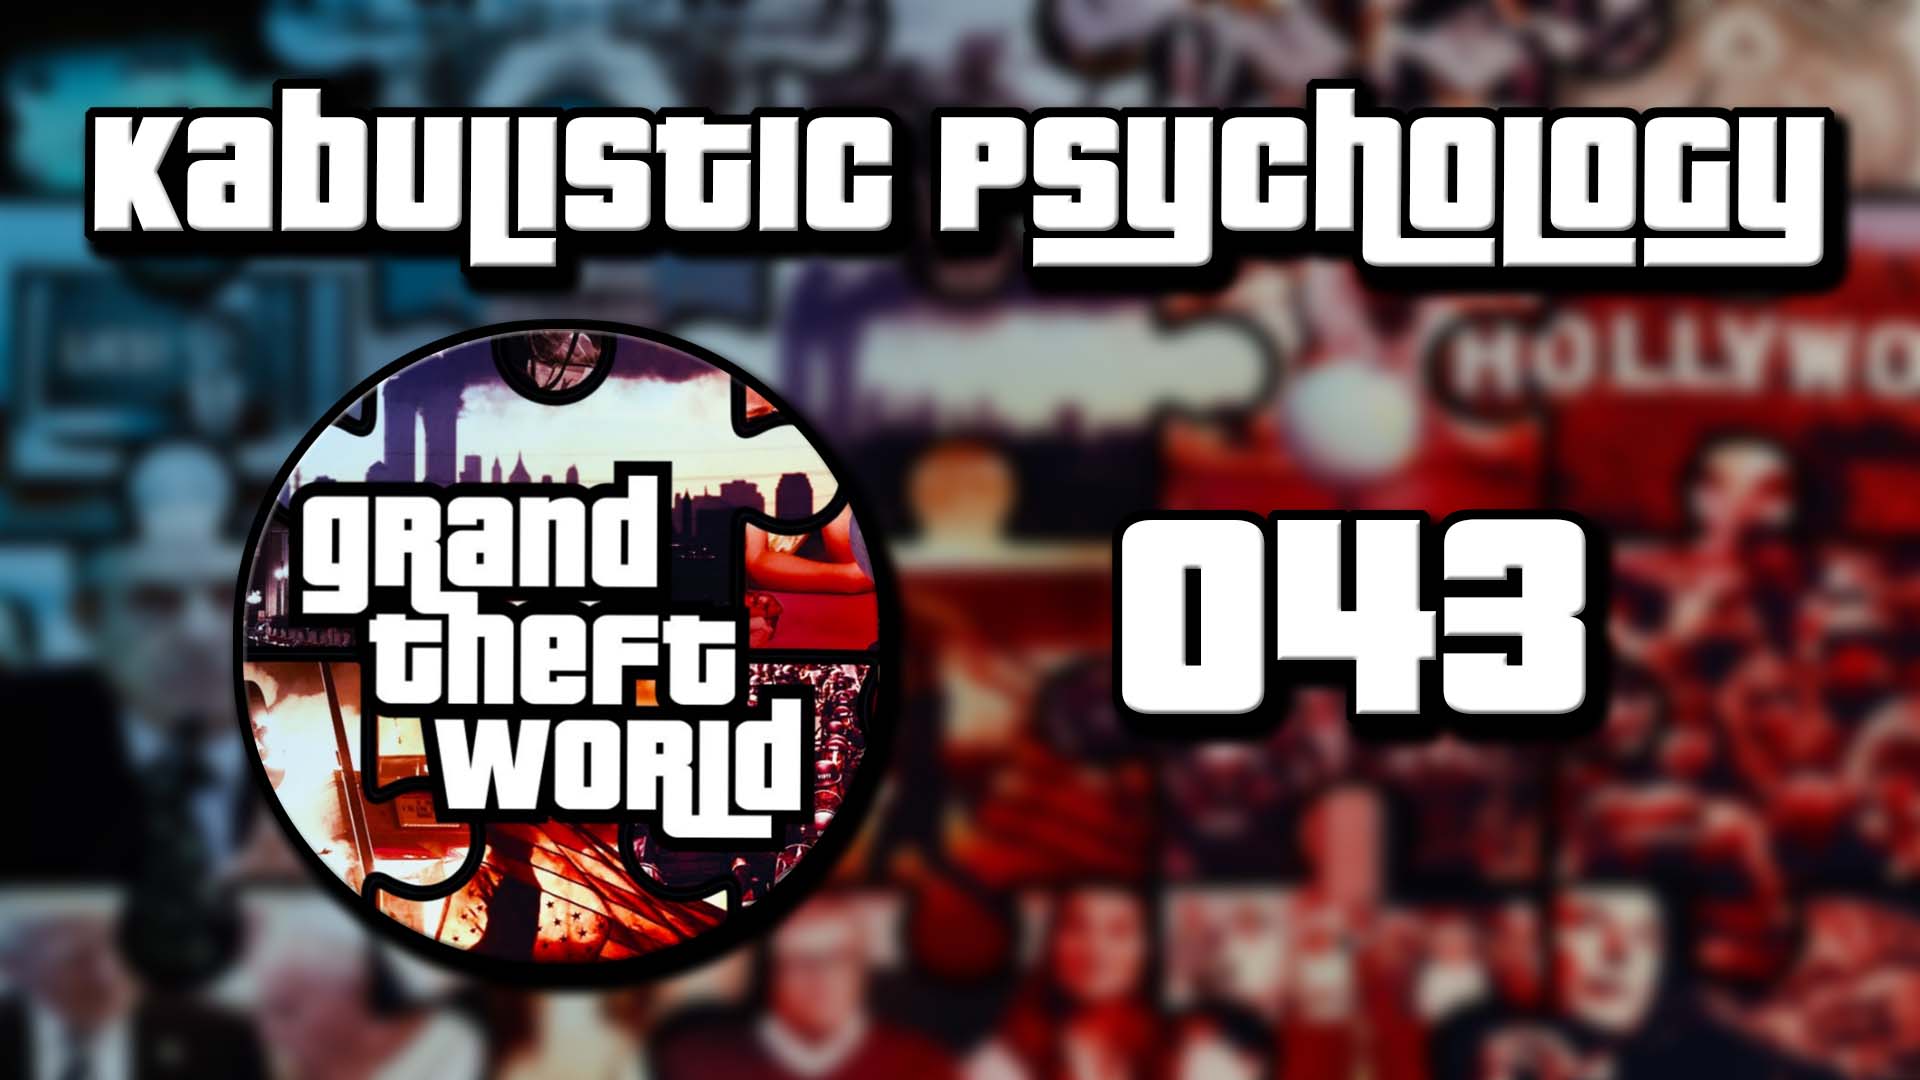 Grand Theft World Podcast 043 | Kabulistic Psychology